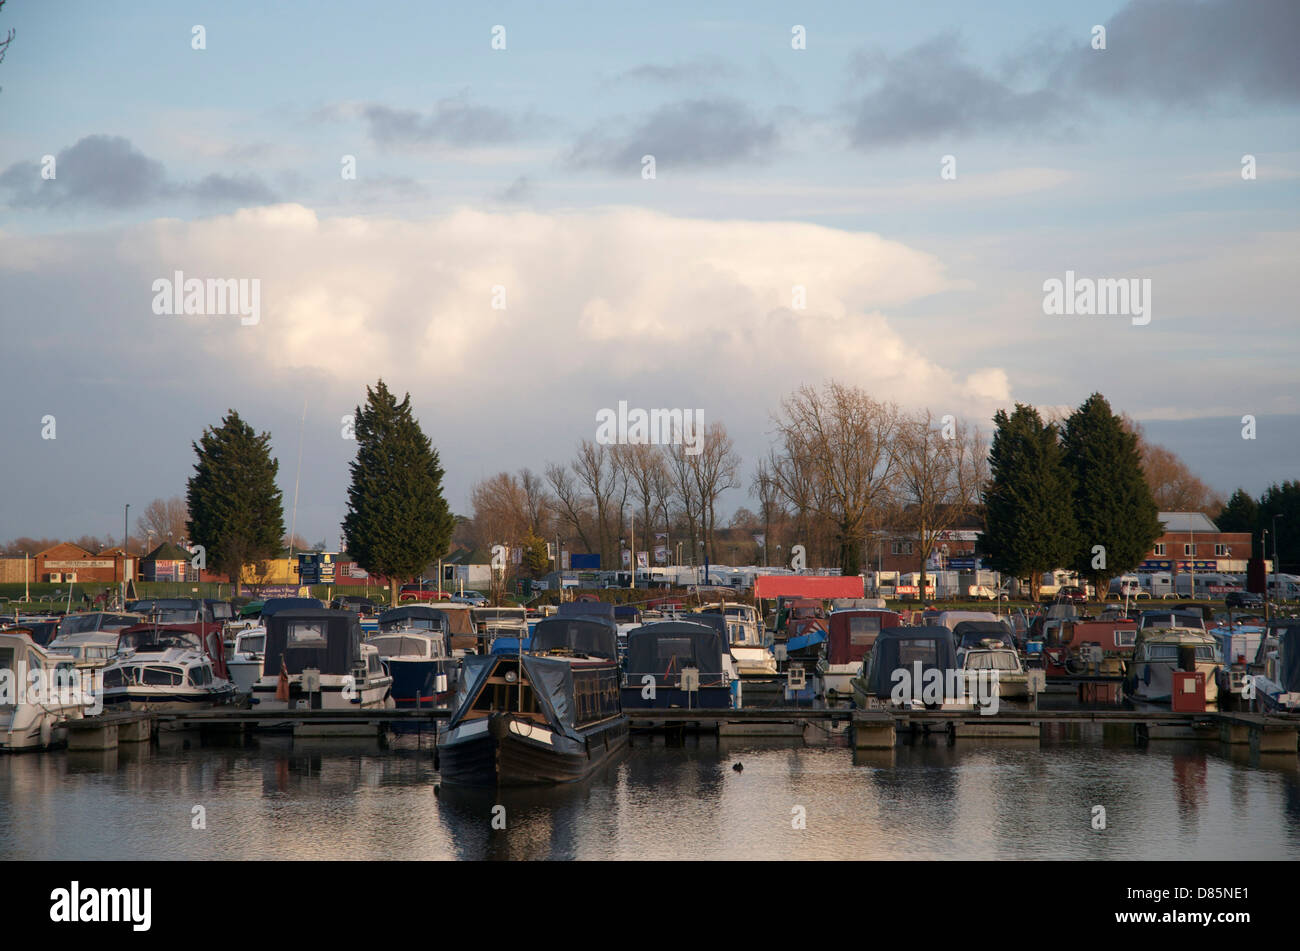 canal boats moored at billing northampton Stock Photo